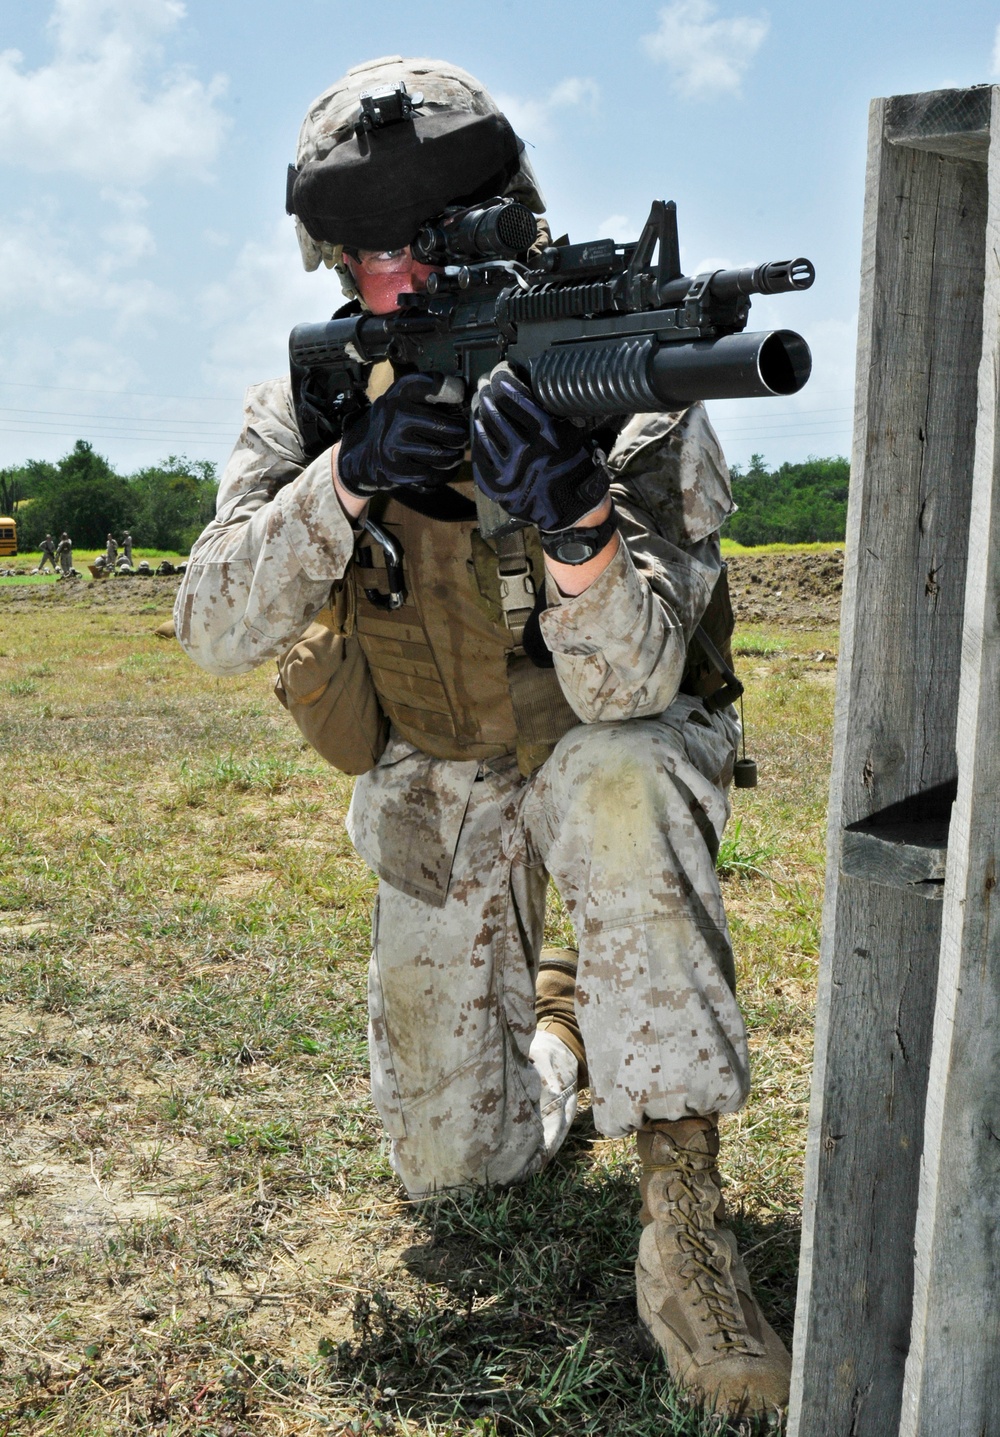 Marine Corps Security Forces gun range